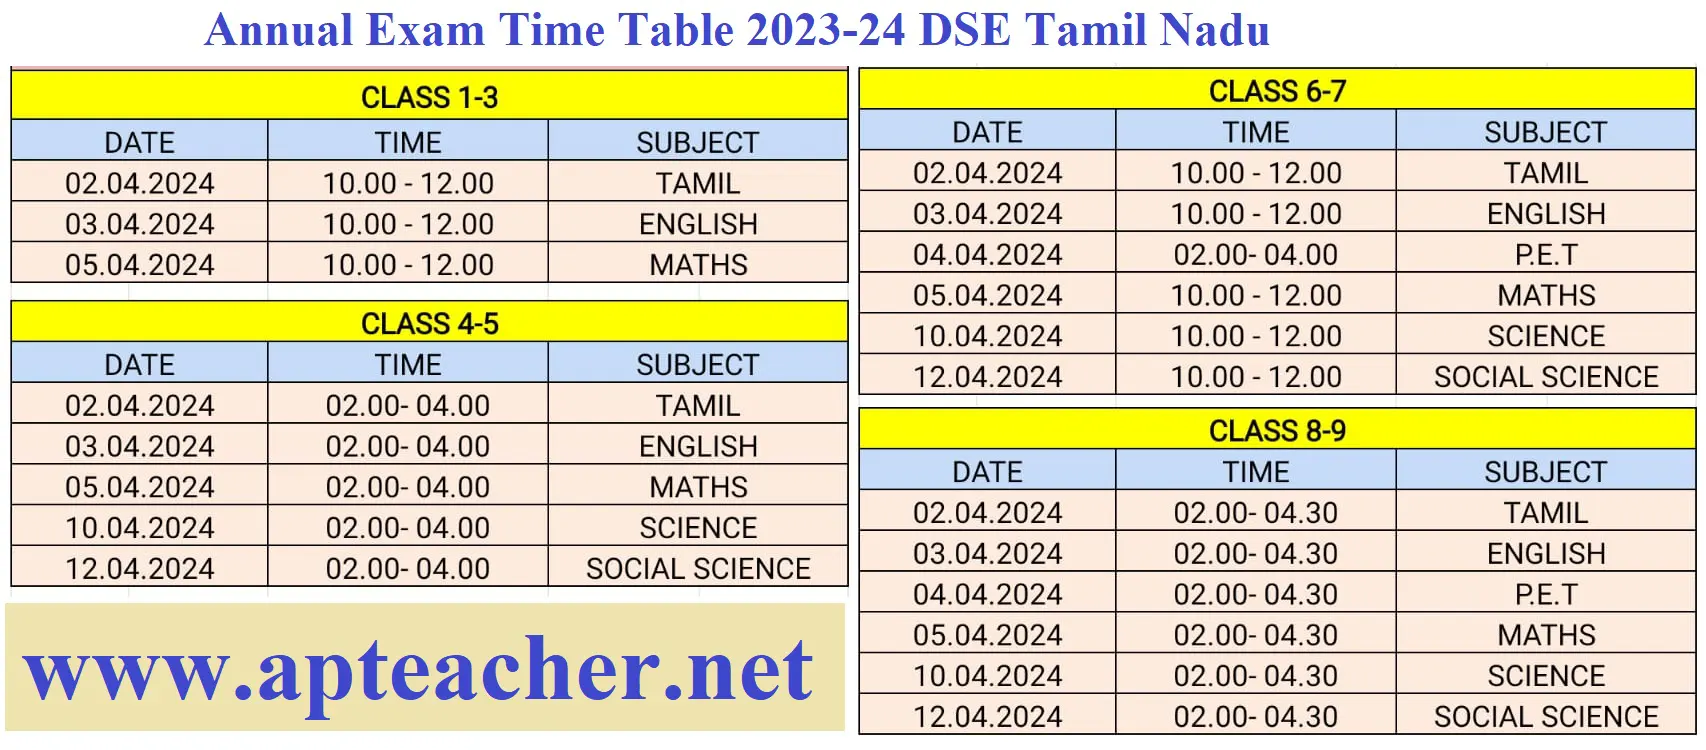 Tamilnadu Schools Annual Exam Time Table 2023-24